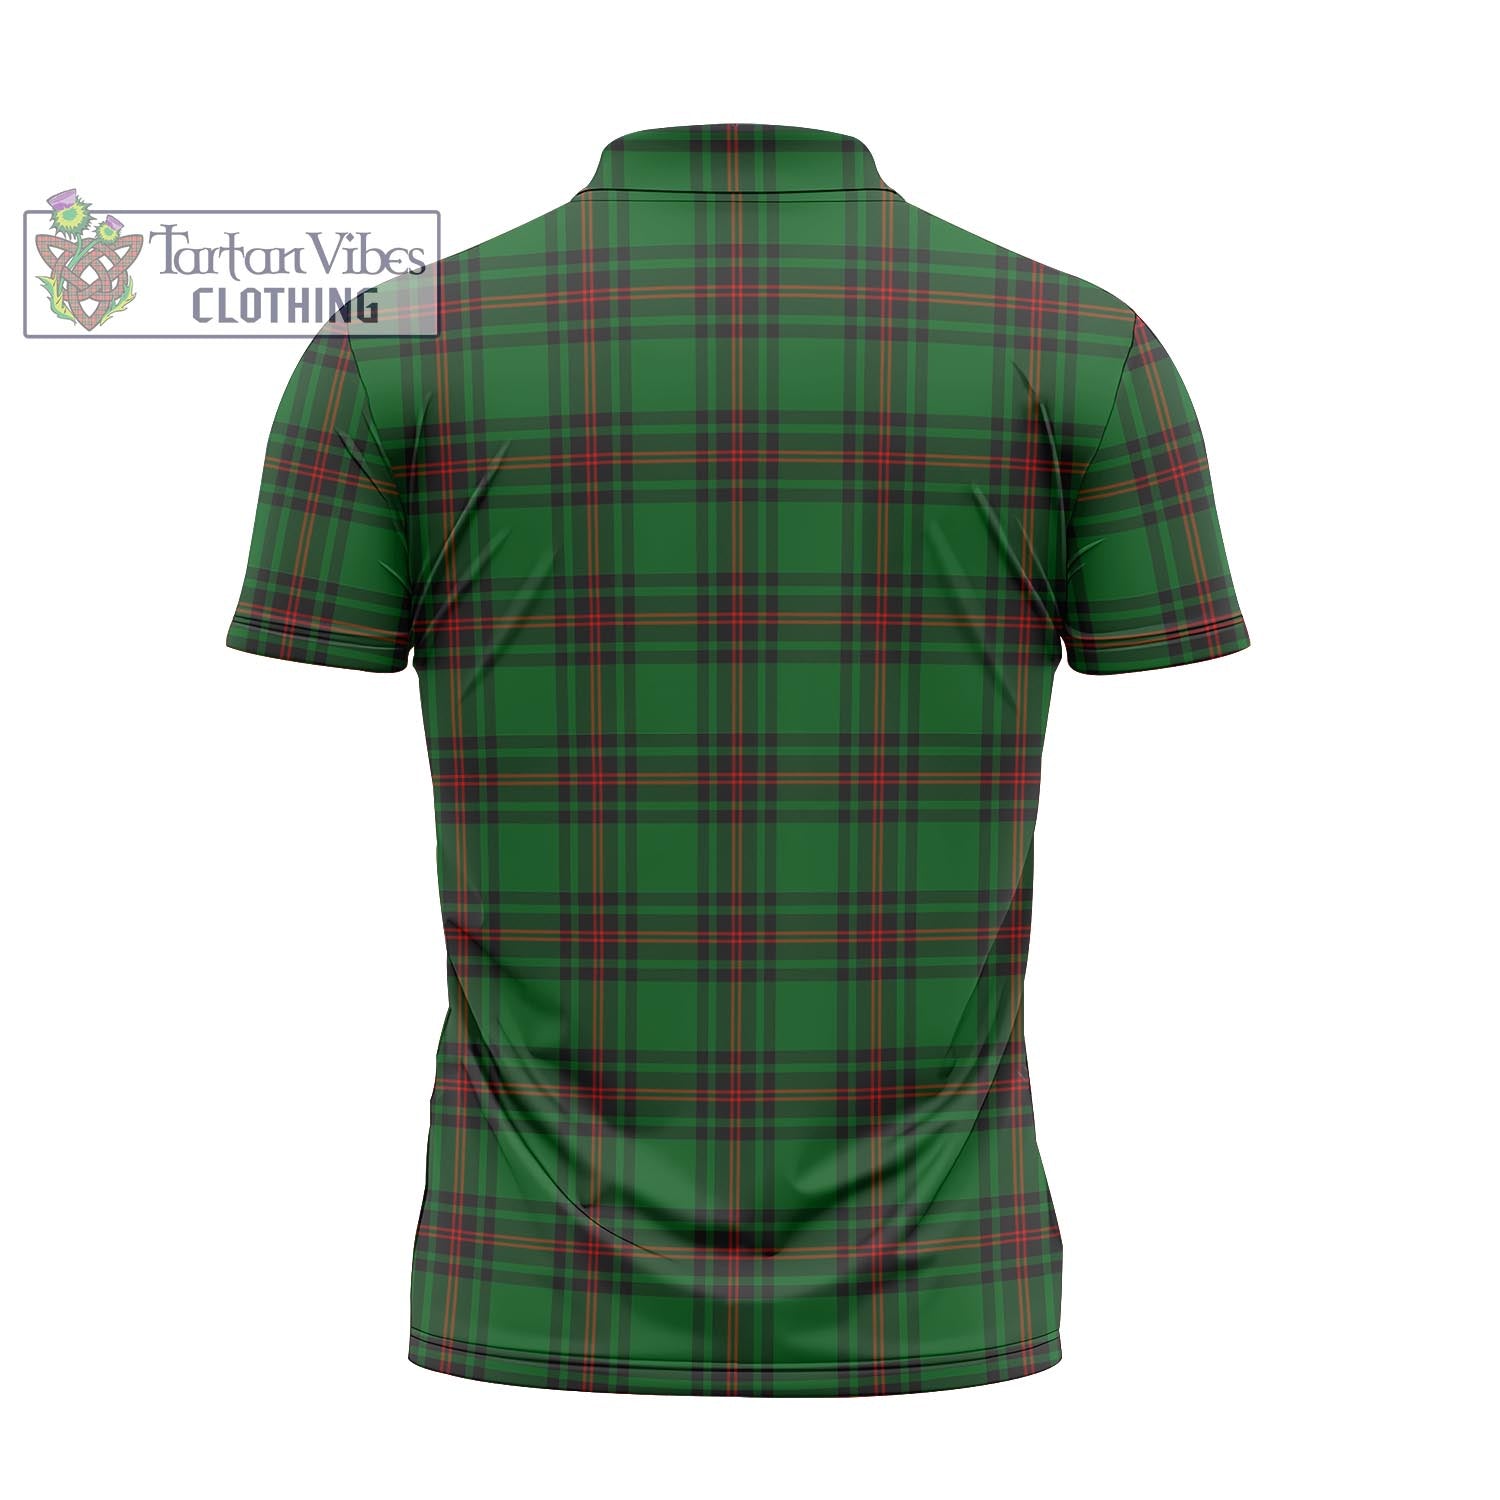 Tartan Vibes Clothing Primrose Tartan Zipper Polo Shirt with Family Crest